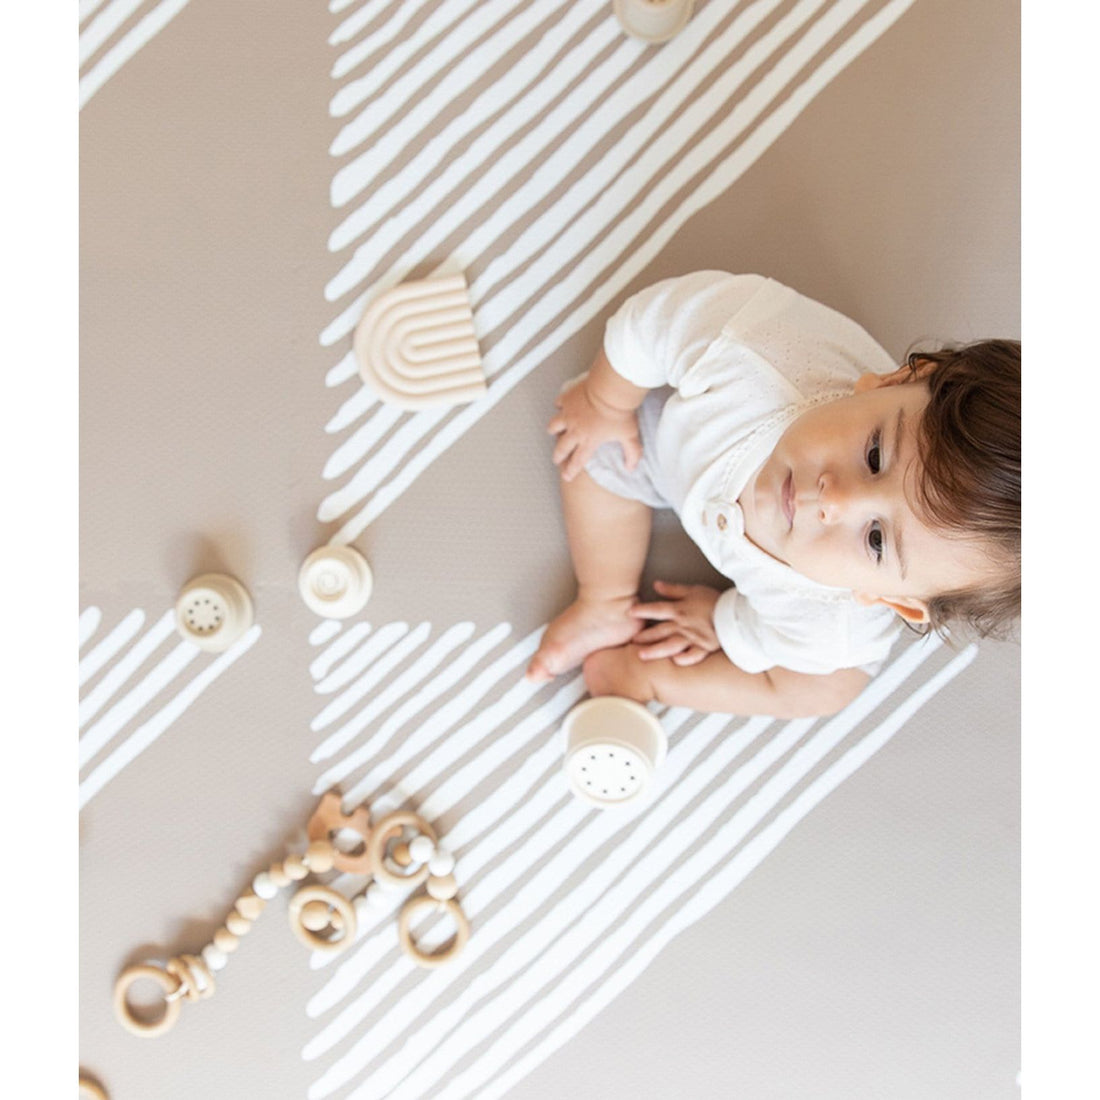 toddlekind-prettier-playmat-sand-line-tan-120x180cm-6-tiles-12-edging-borders-baby-nursery-home-decor-todk-339058-00_1